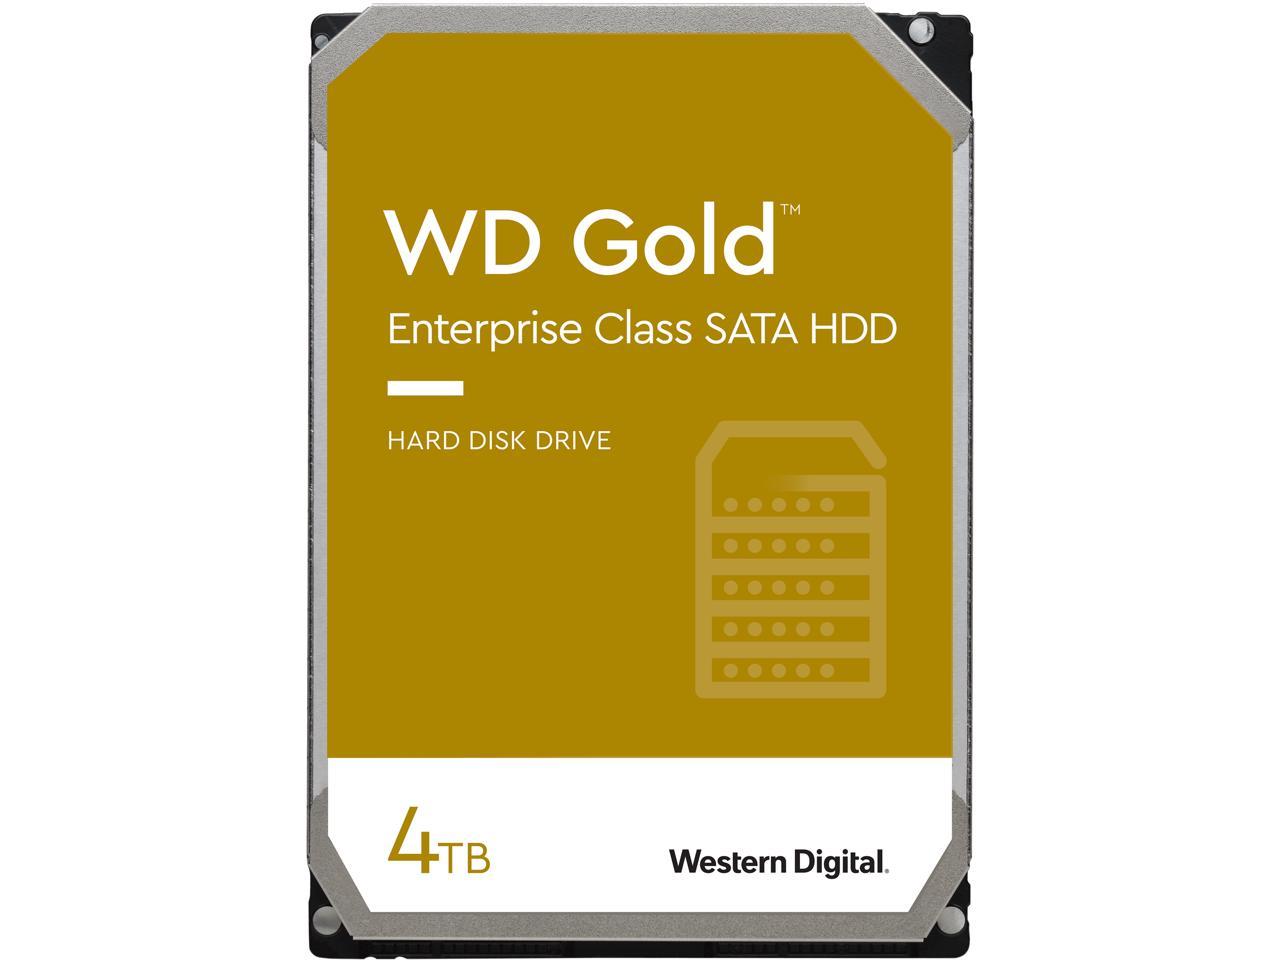 Wd Gold 4Tb Enterprise Class Hard Disk Drive - 7200 Rpm Class Sata 6Gb/S 256Mb Cache 3.5 Inch - Wd4003Fryz